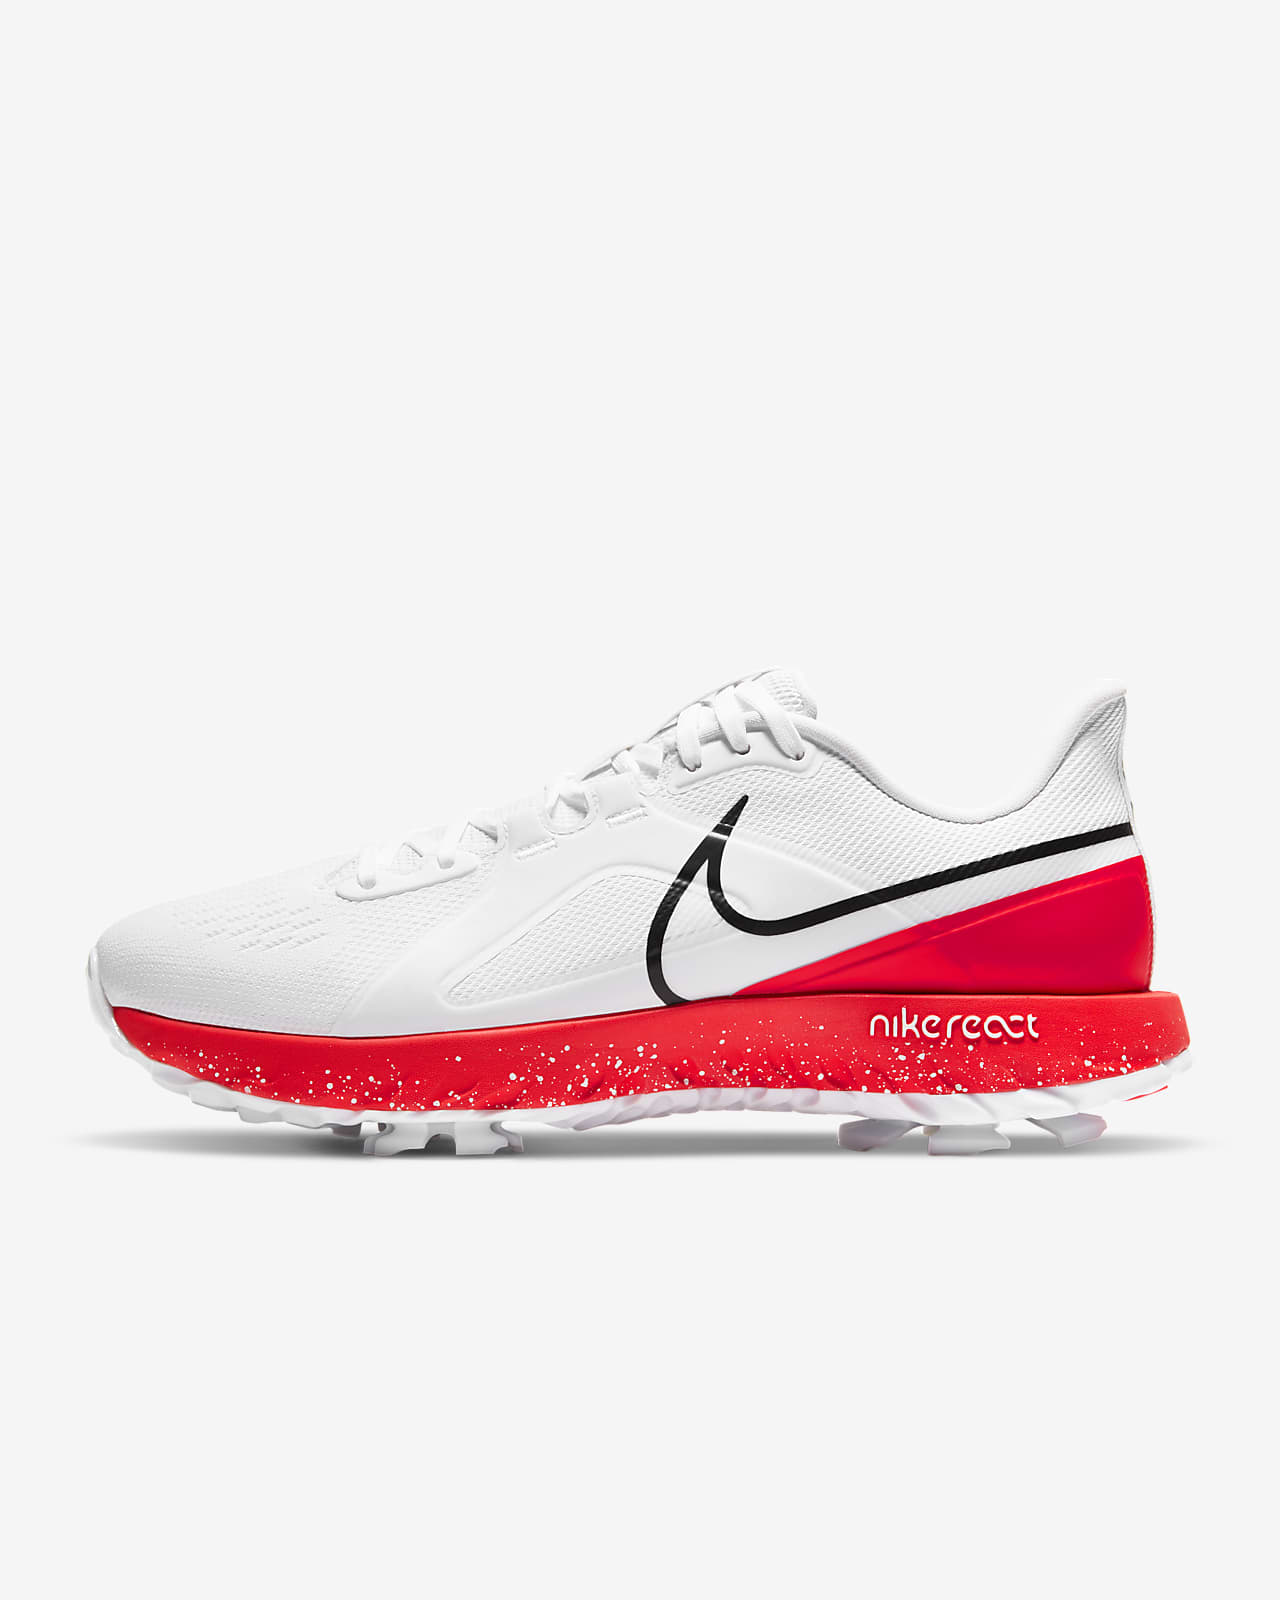 Nike React Infinity Pro Golf Shoe (Wide 